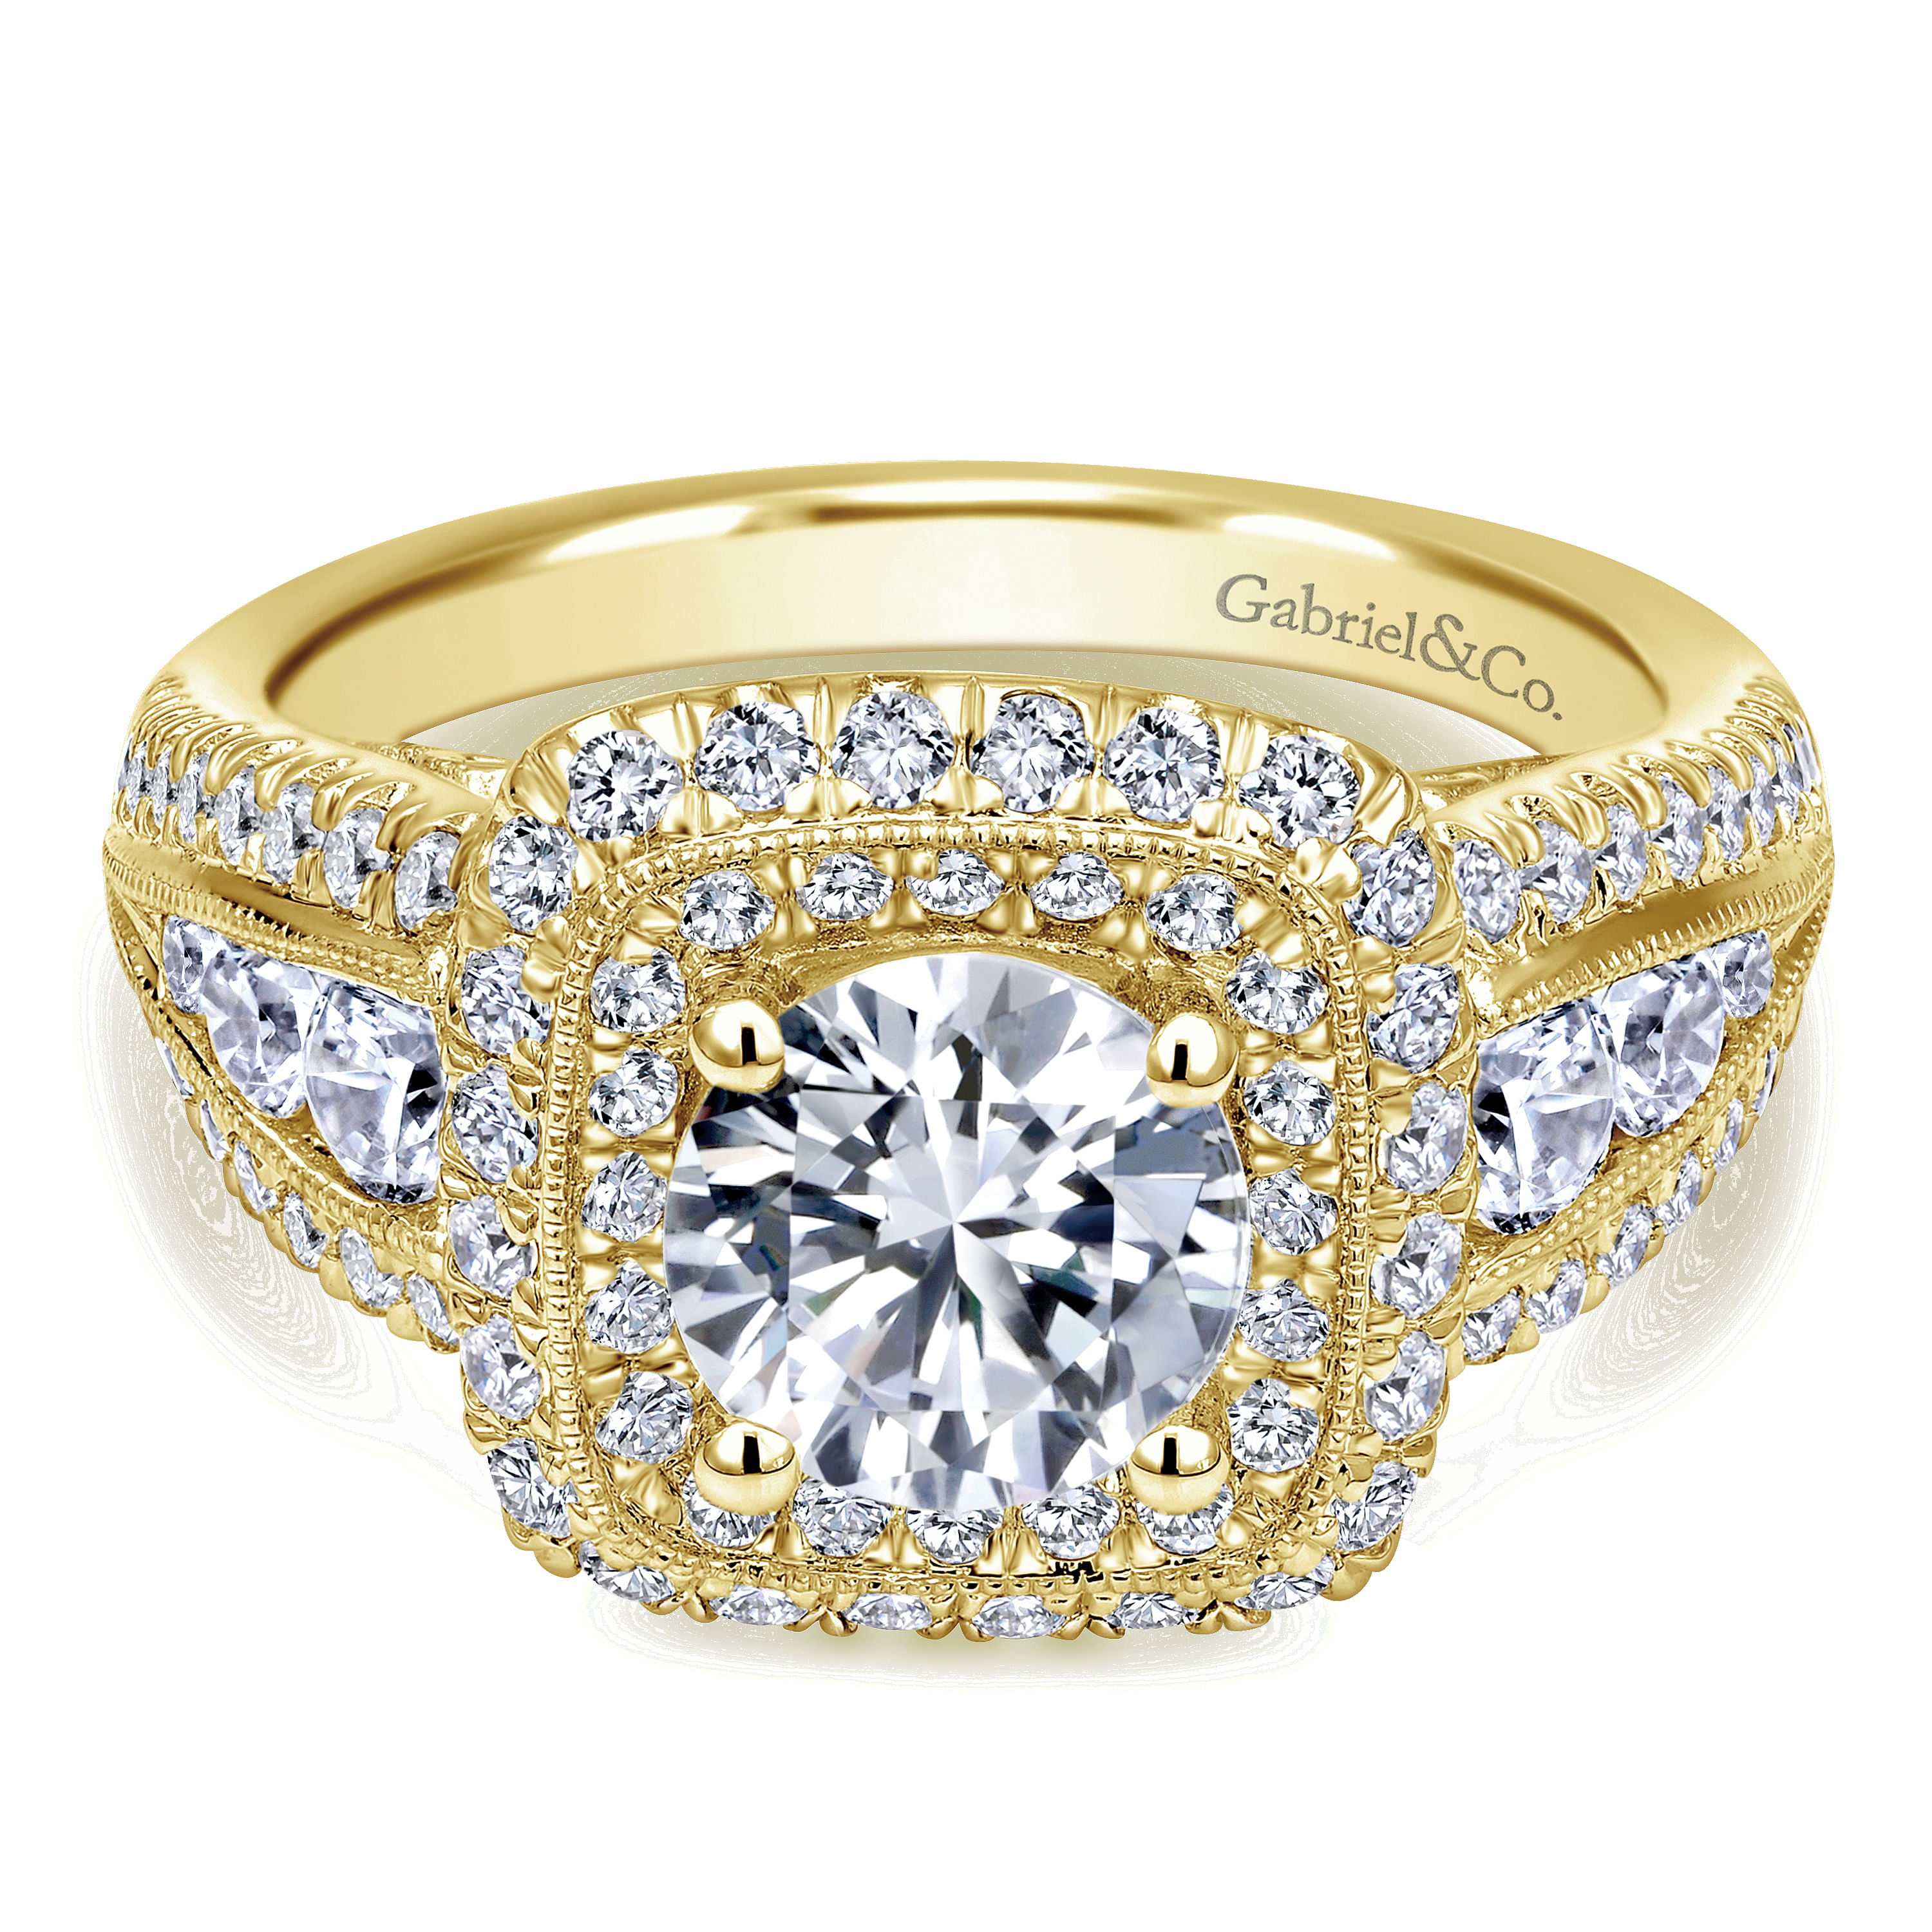 Vintage Inspired 14K Yellow Gold Cushion Double Halo Round Diamond Engagement Ring